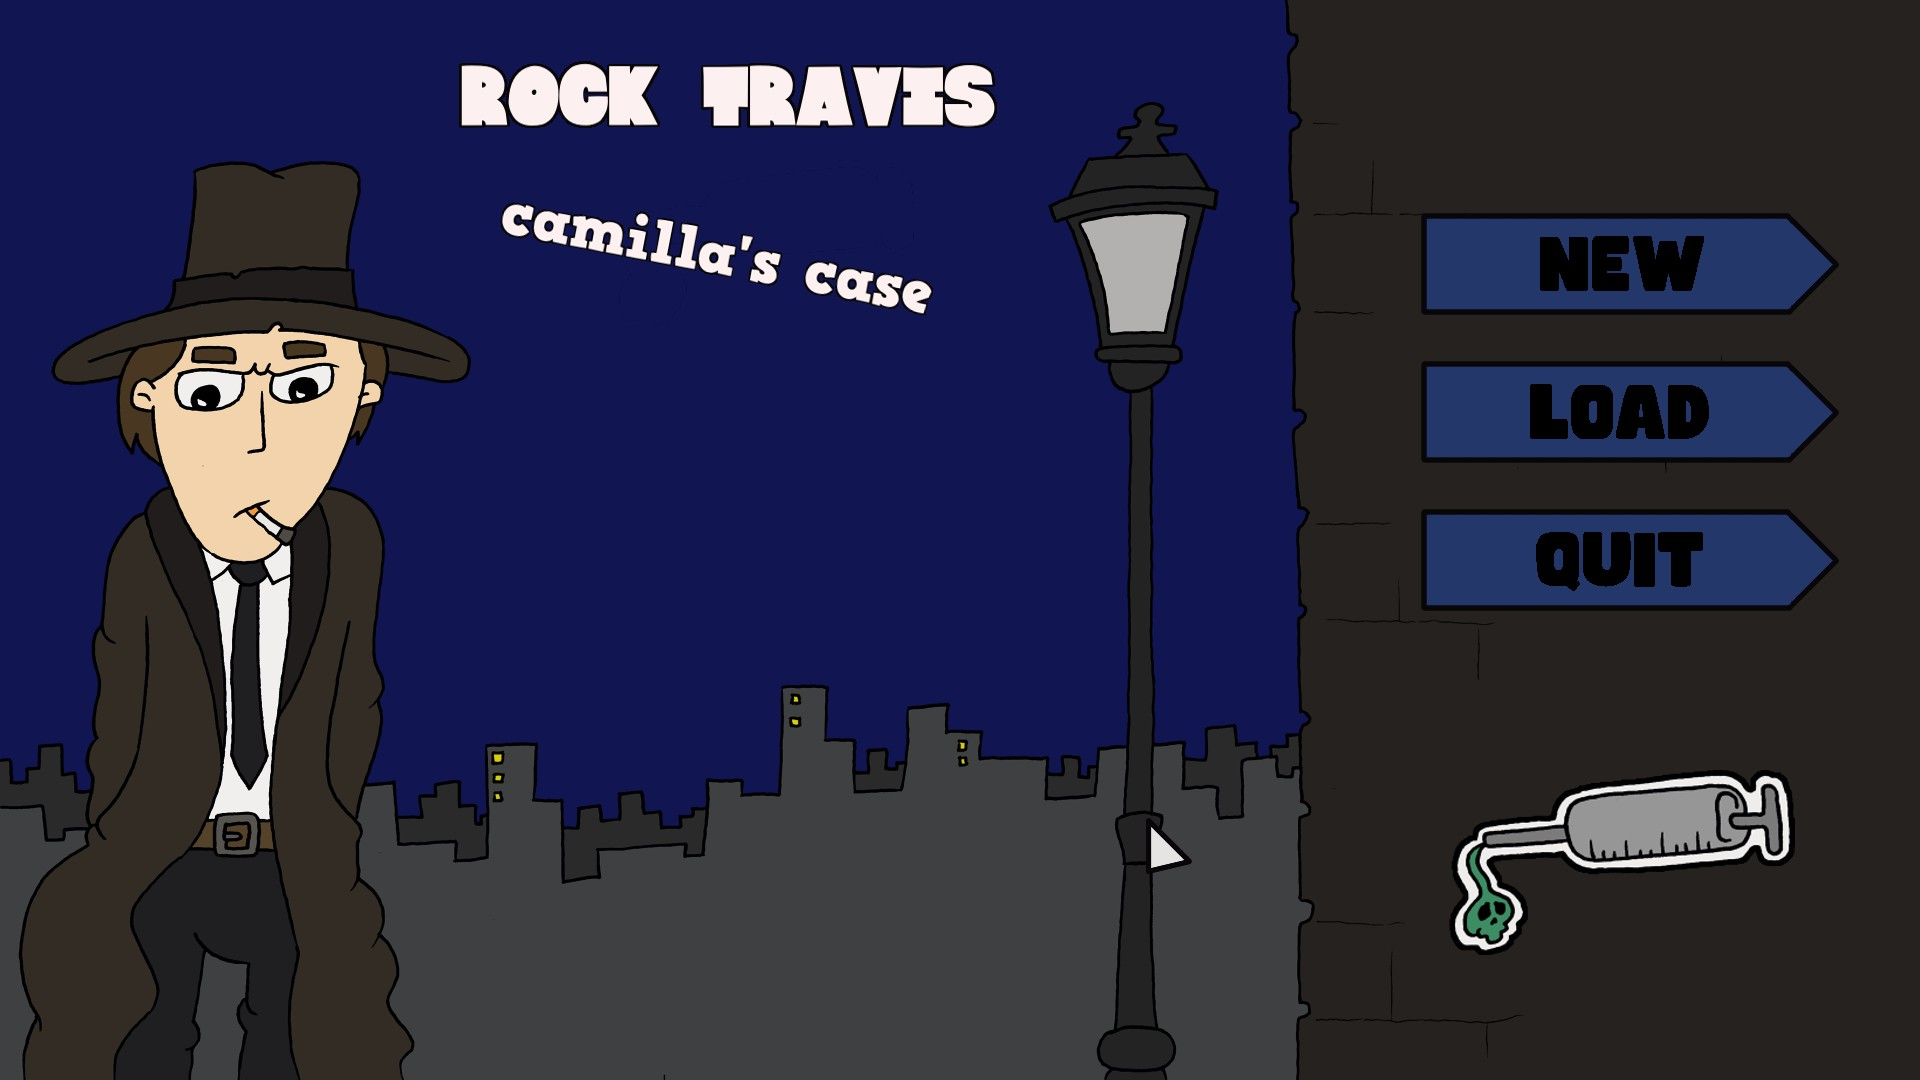 Screenshot 1 of rock travis - camilla's case